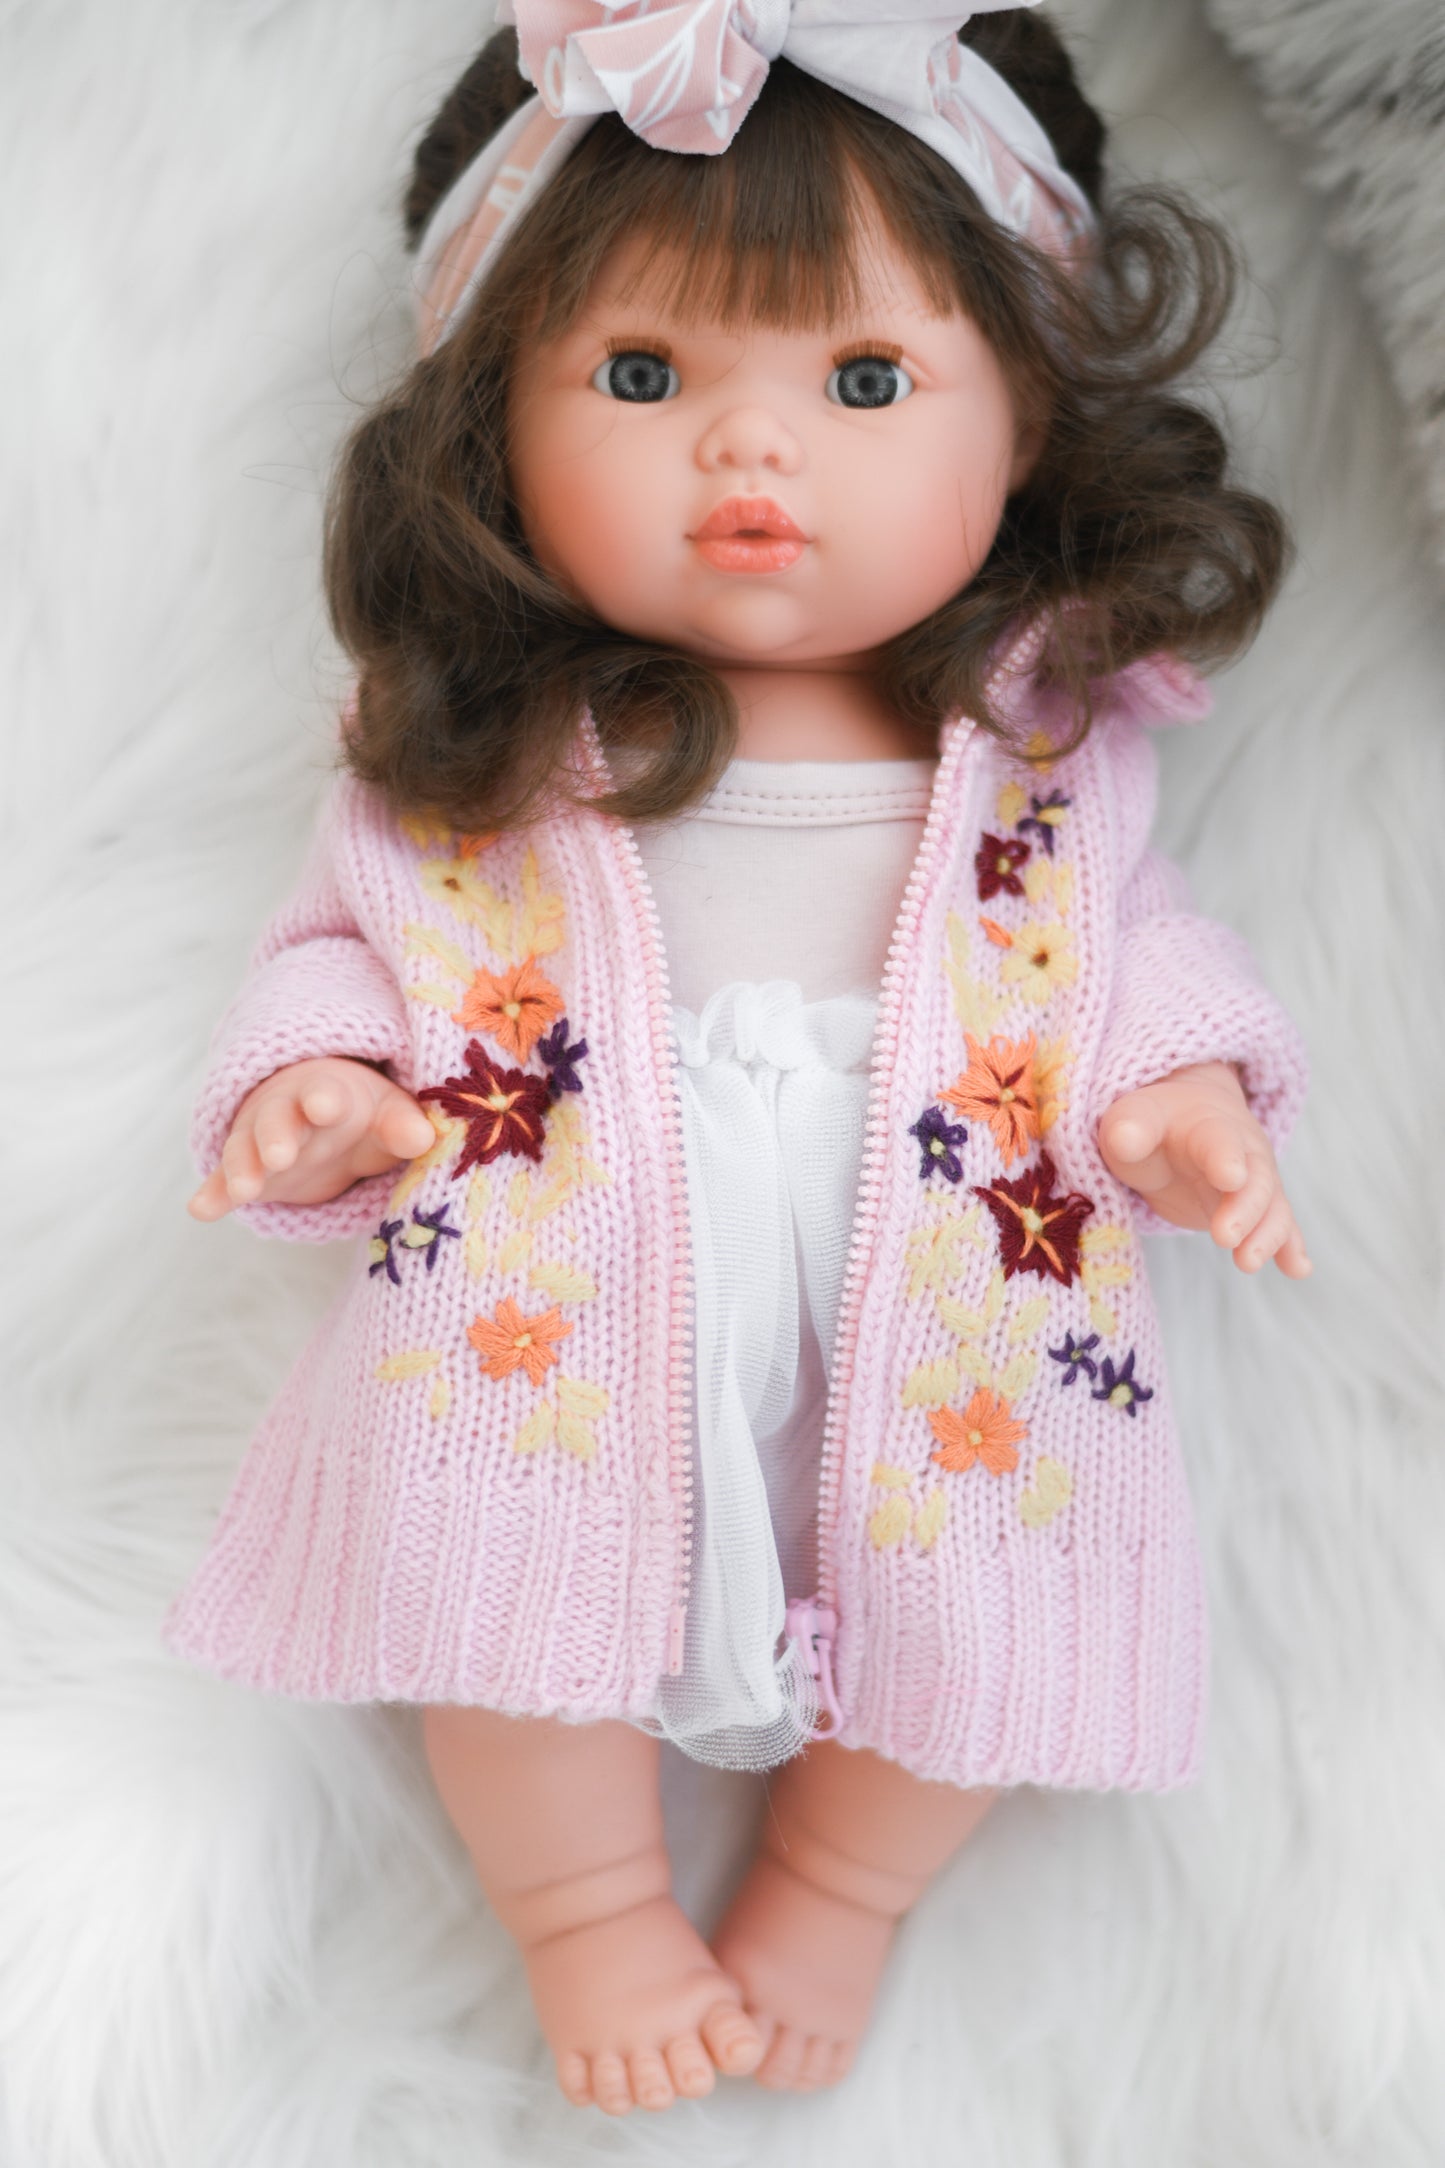 Floral Boho Cardigan Sweater - Doll